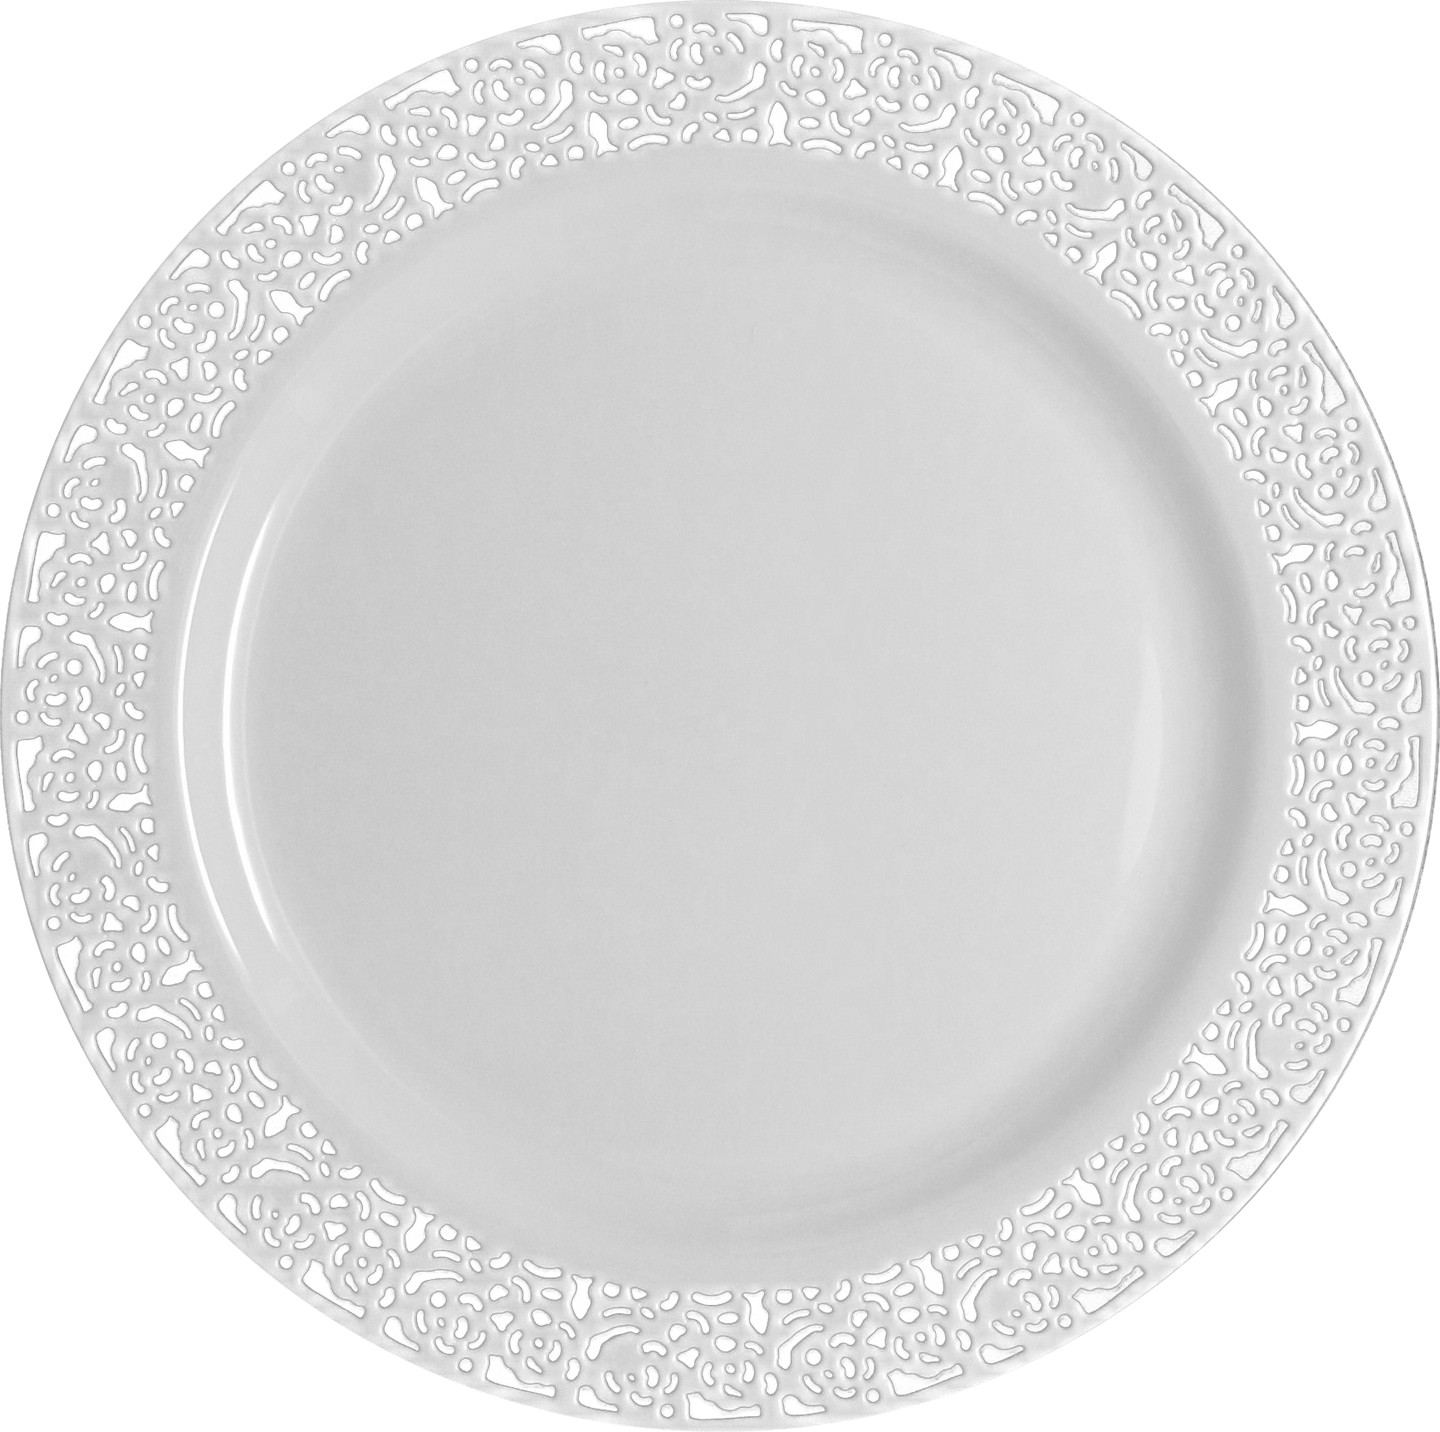 Inspiration - Assiette jetable blanc avec bord en dentelle blanc